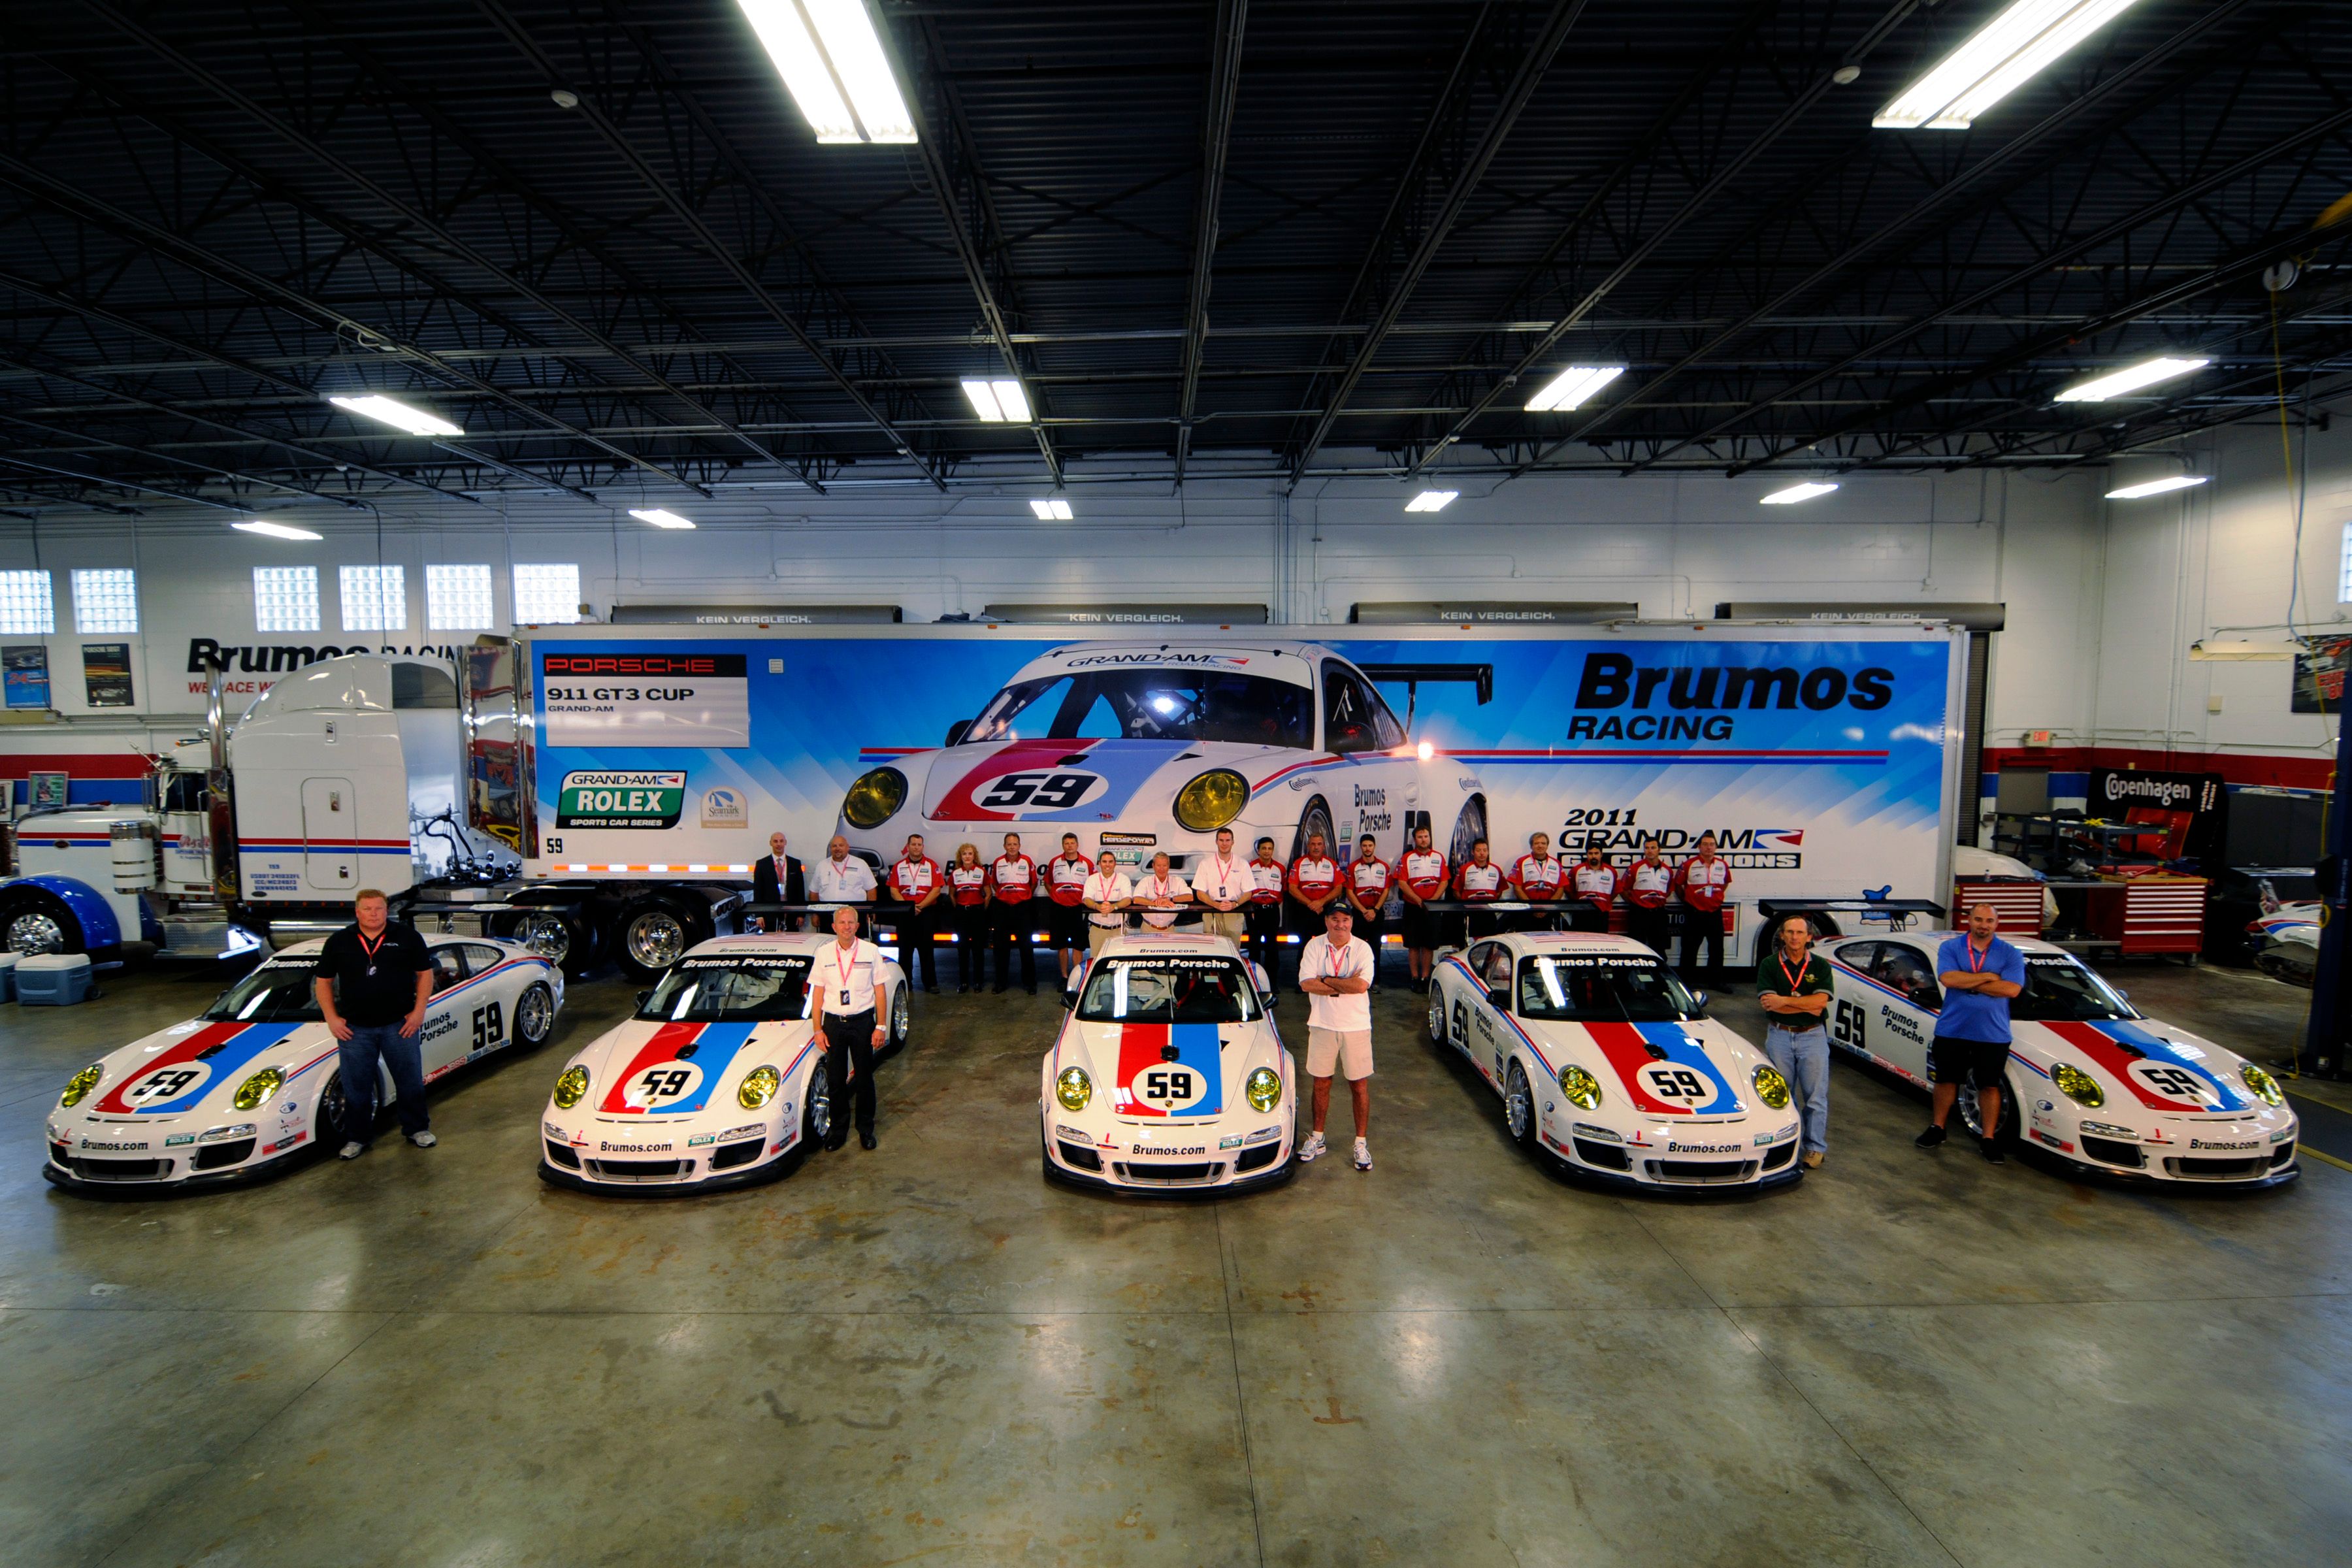 Brumos Porsche a common fixture in American sports cars